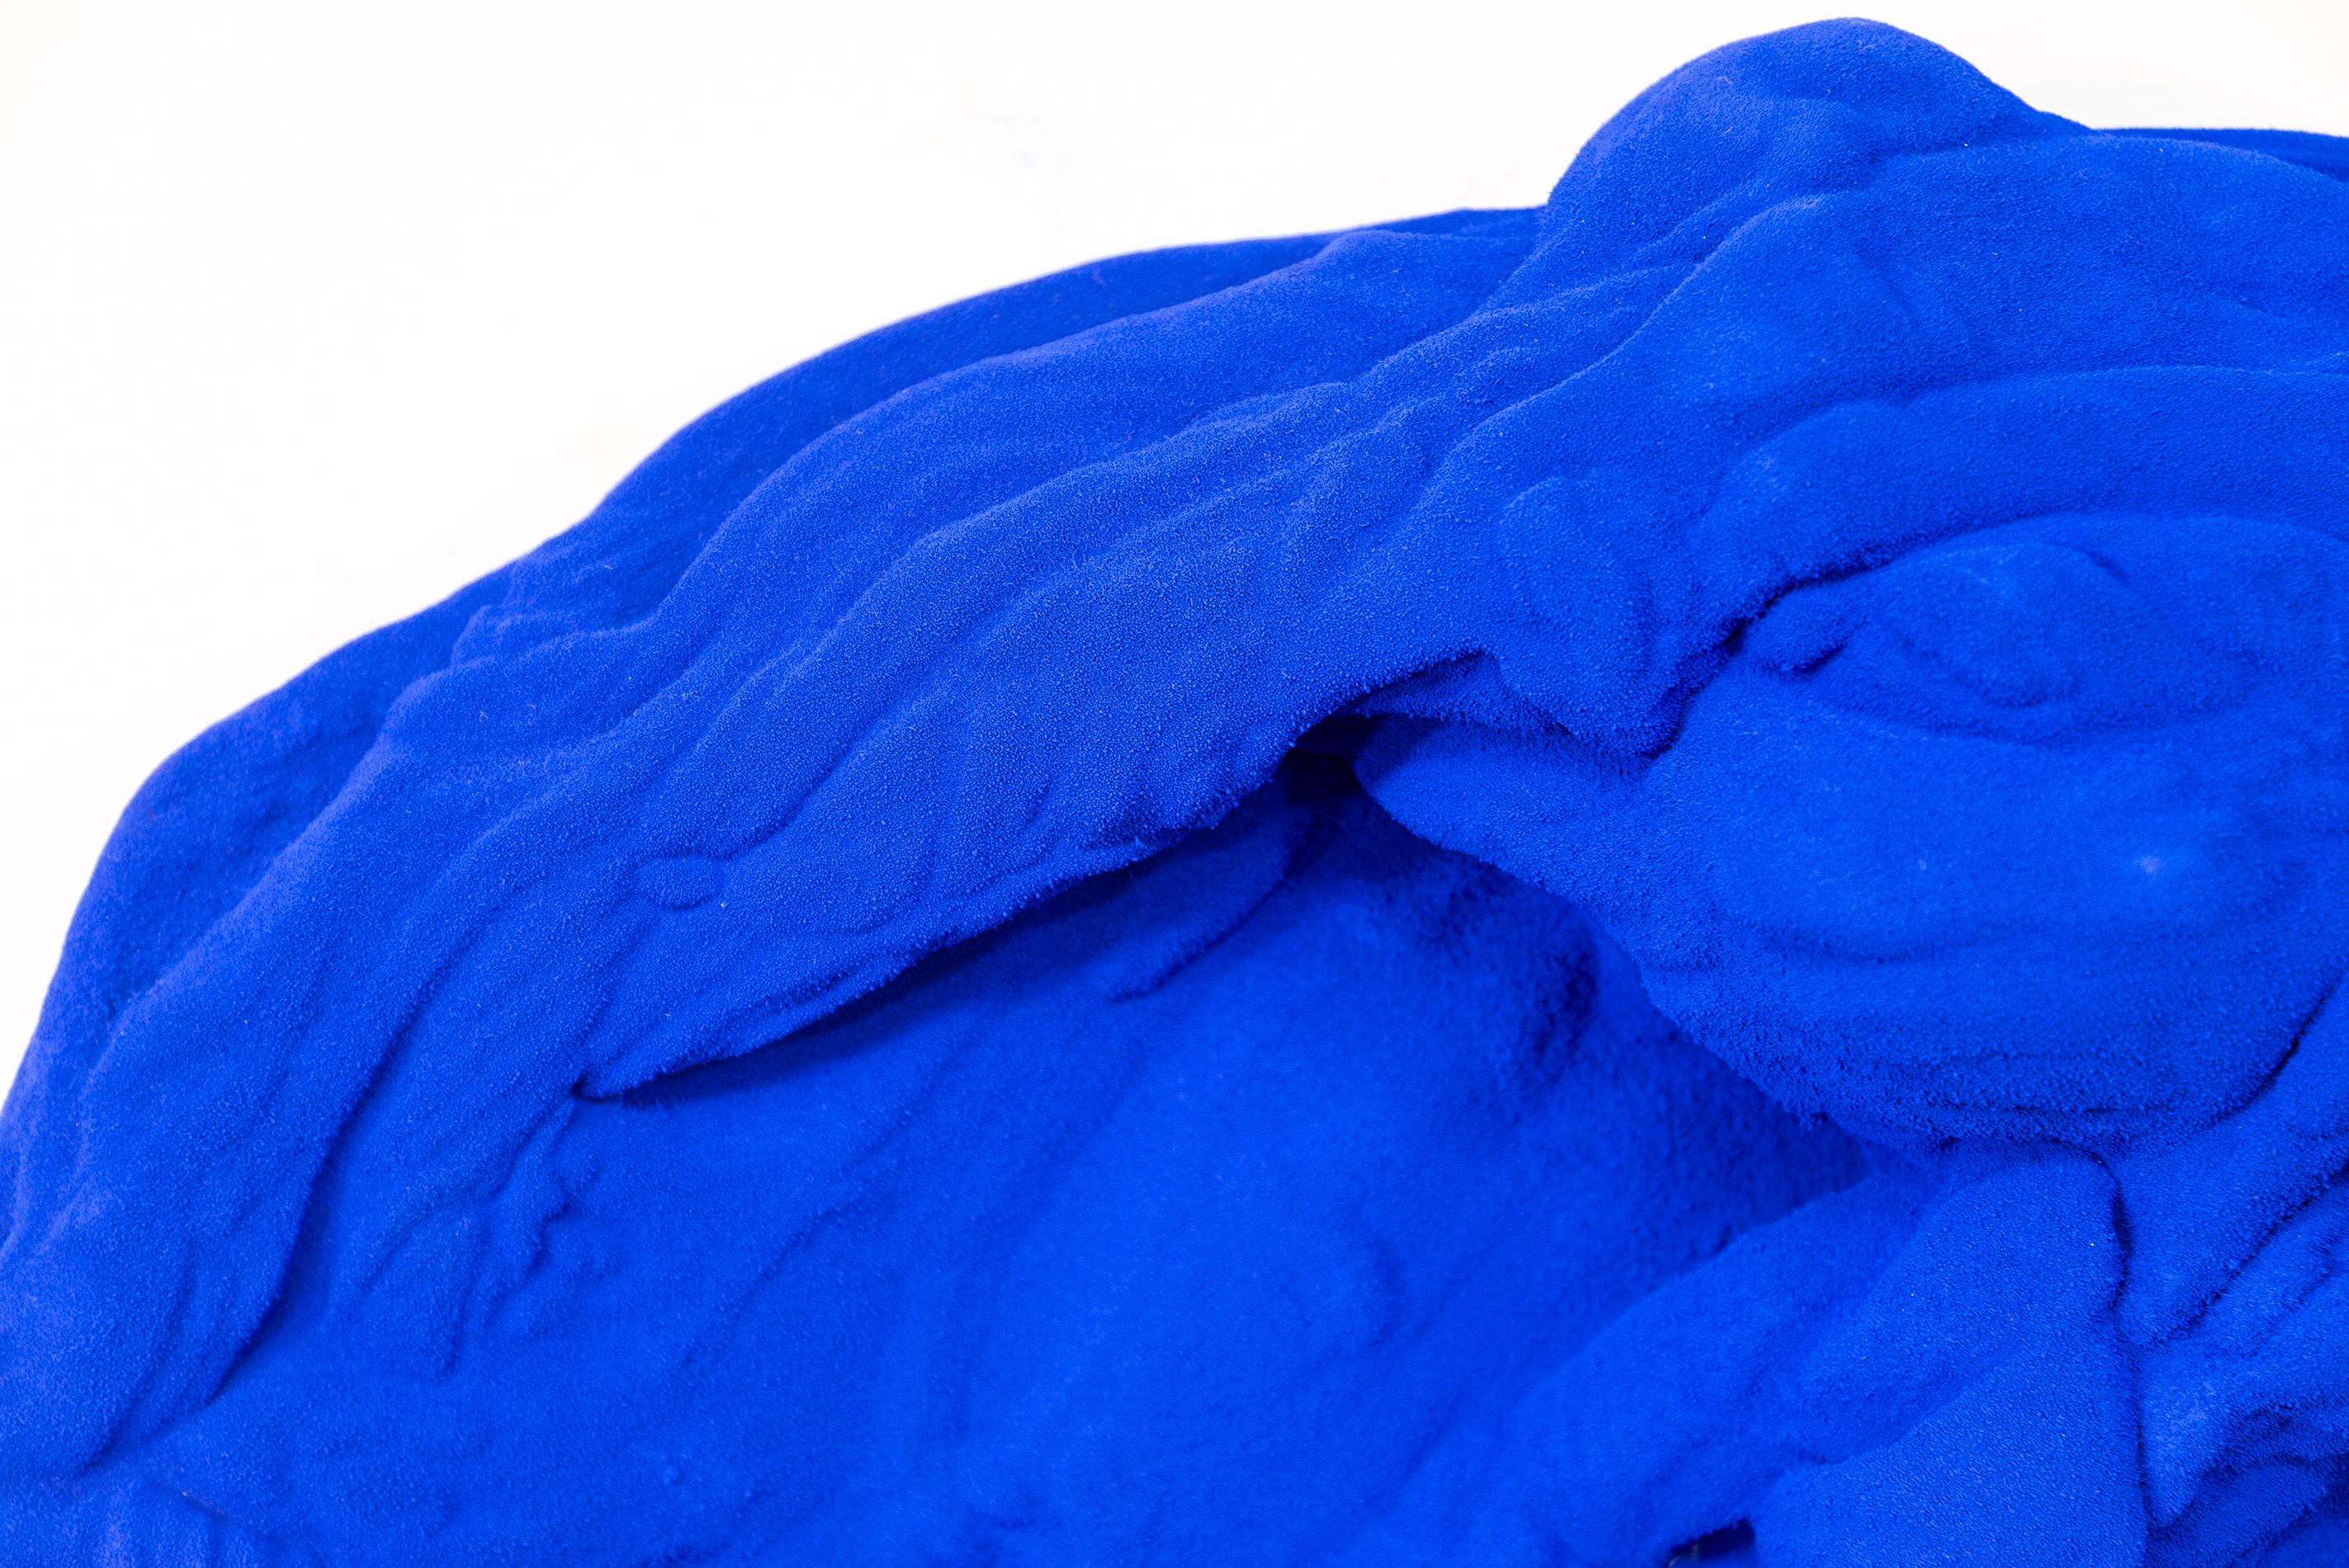 Blue Matter 1 - matte, blue, textured, abstract, mixed media wall sculpture For Sale 2